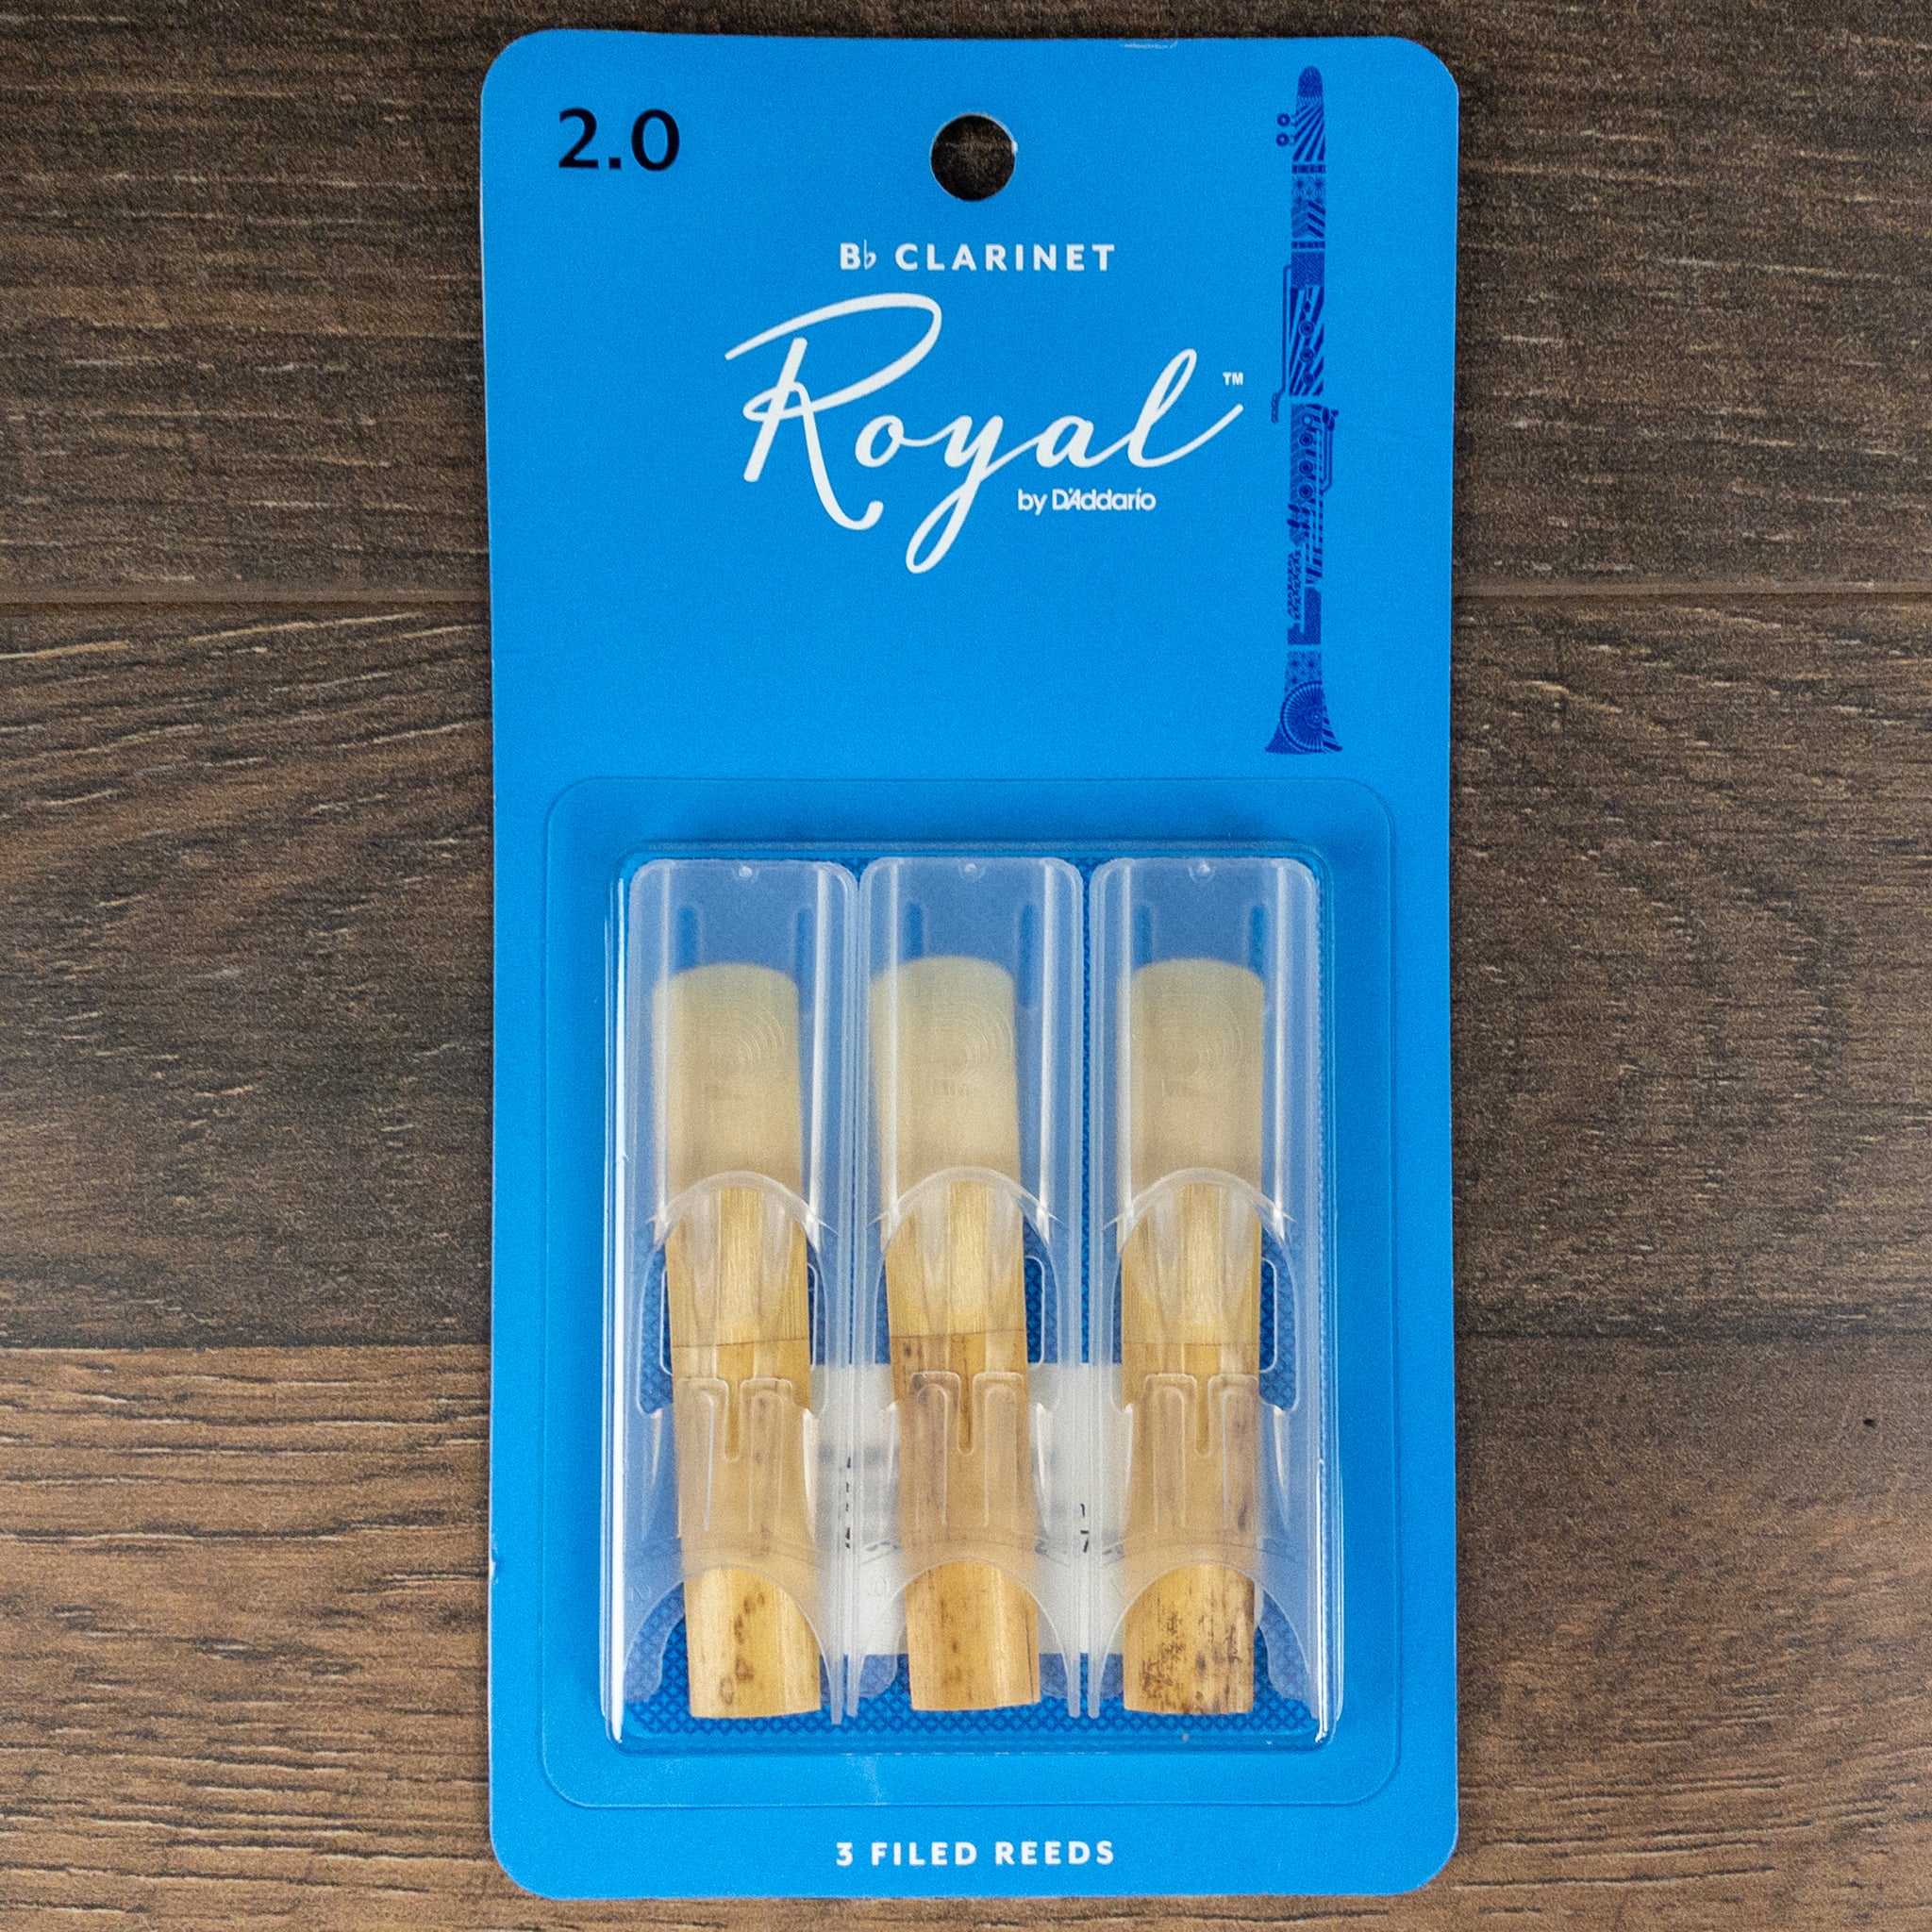 Rico Royal Bb Clarinet Reeds 3 Pack by D'Addario